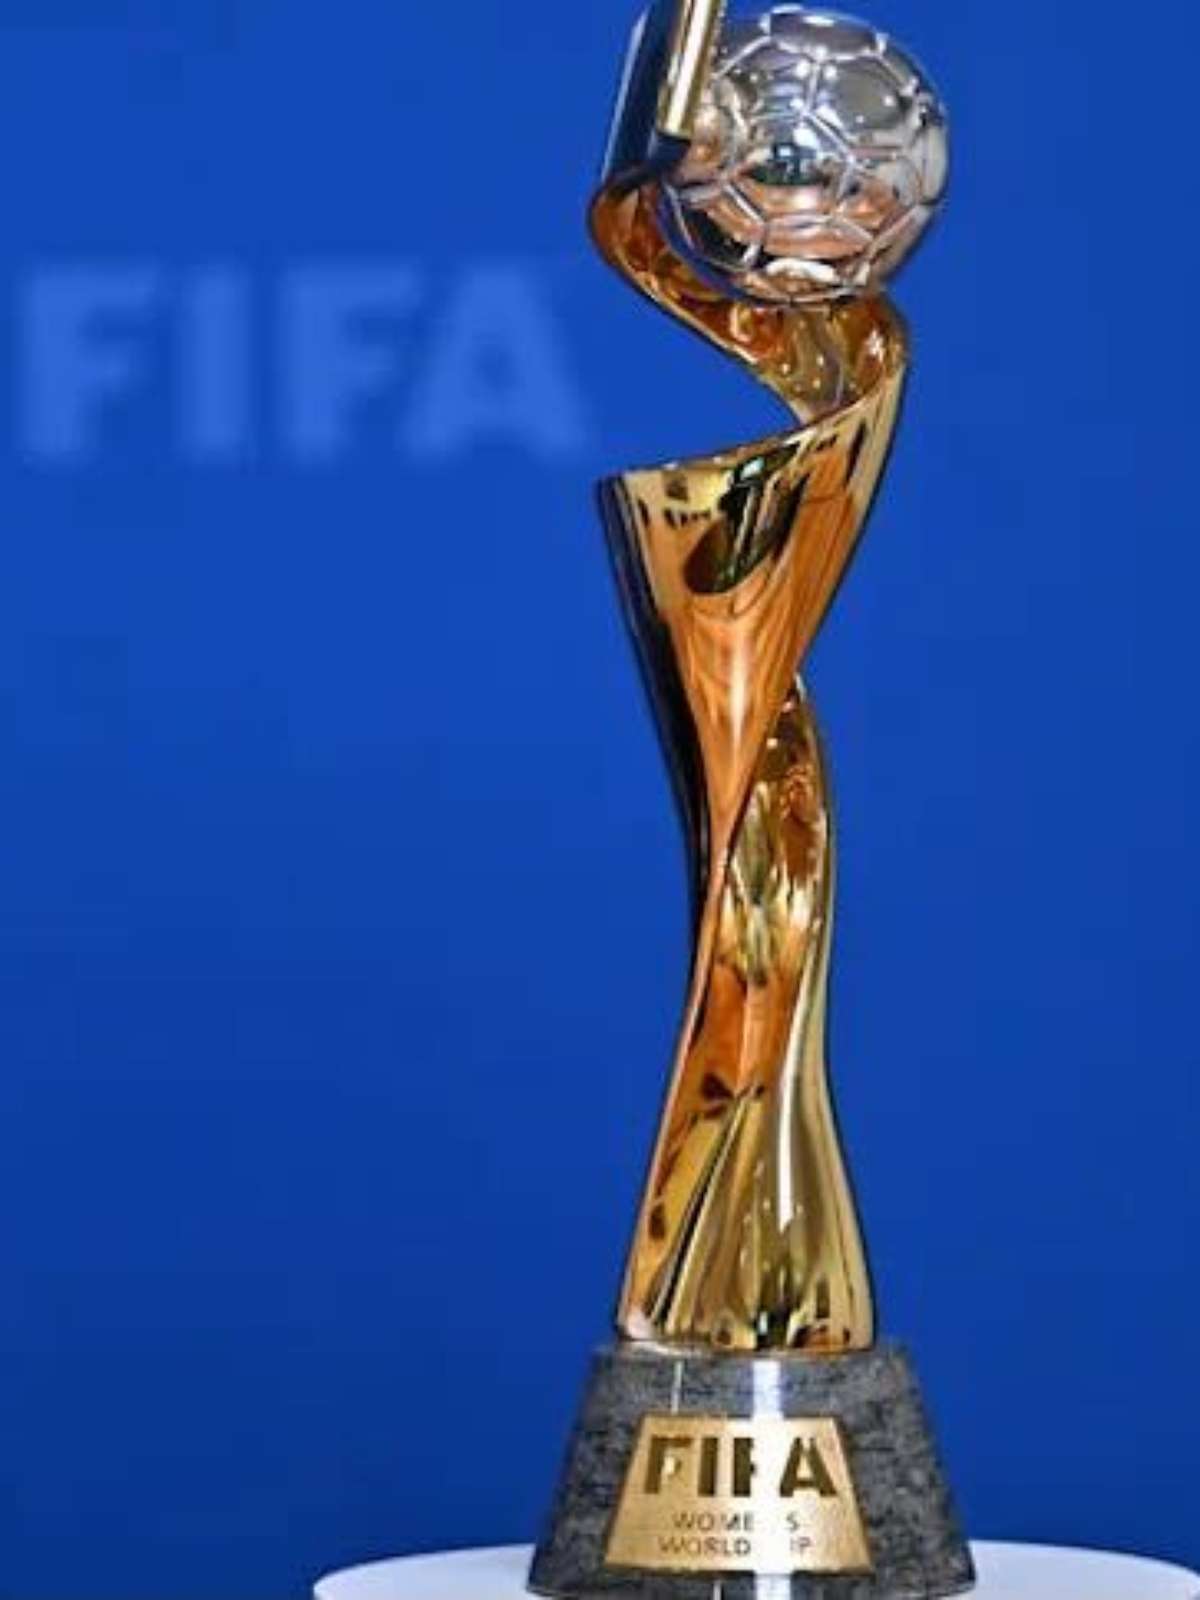 Conheça as características e curiosidades da Taça da Copa do Mundo